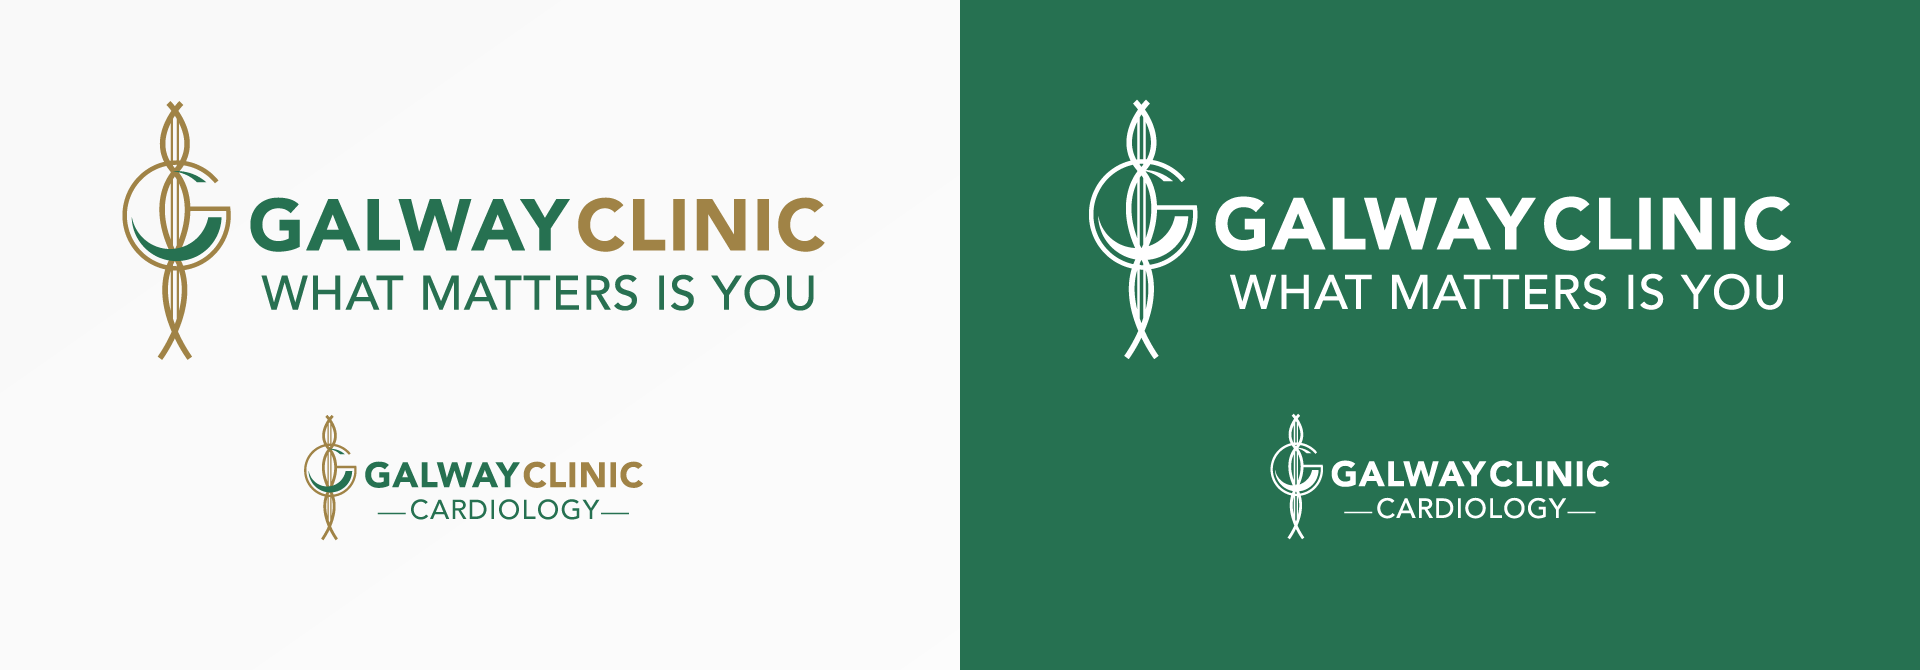 Galway Clinic logo refresh